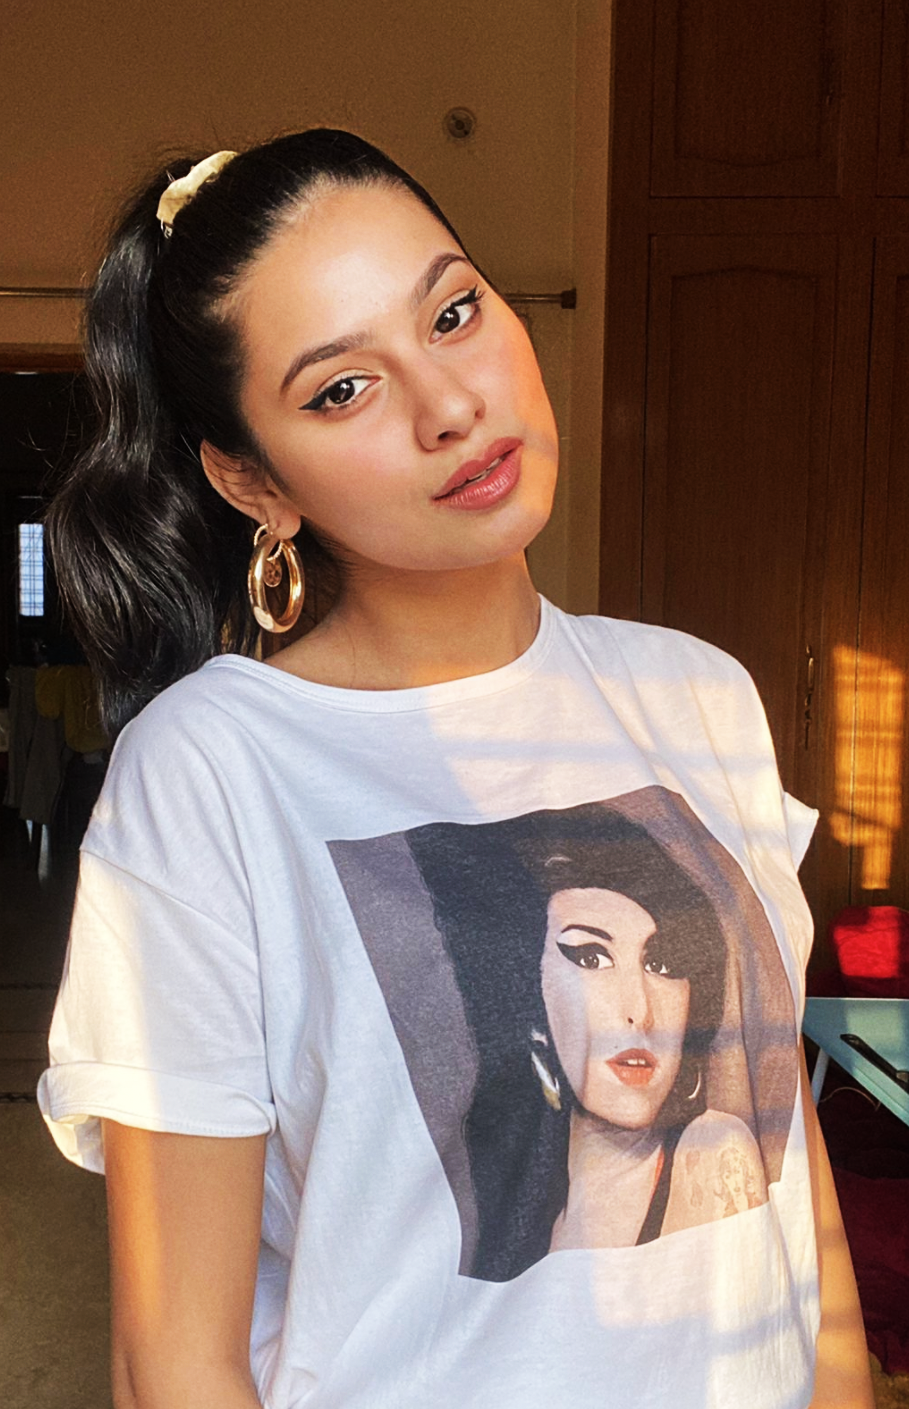 Amy Winehouse Tshirt